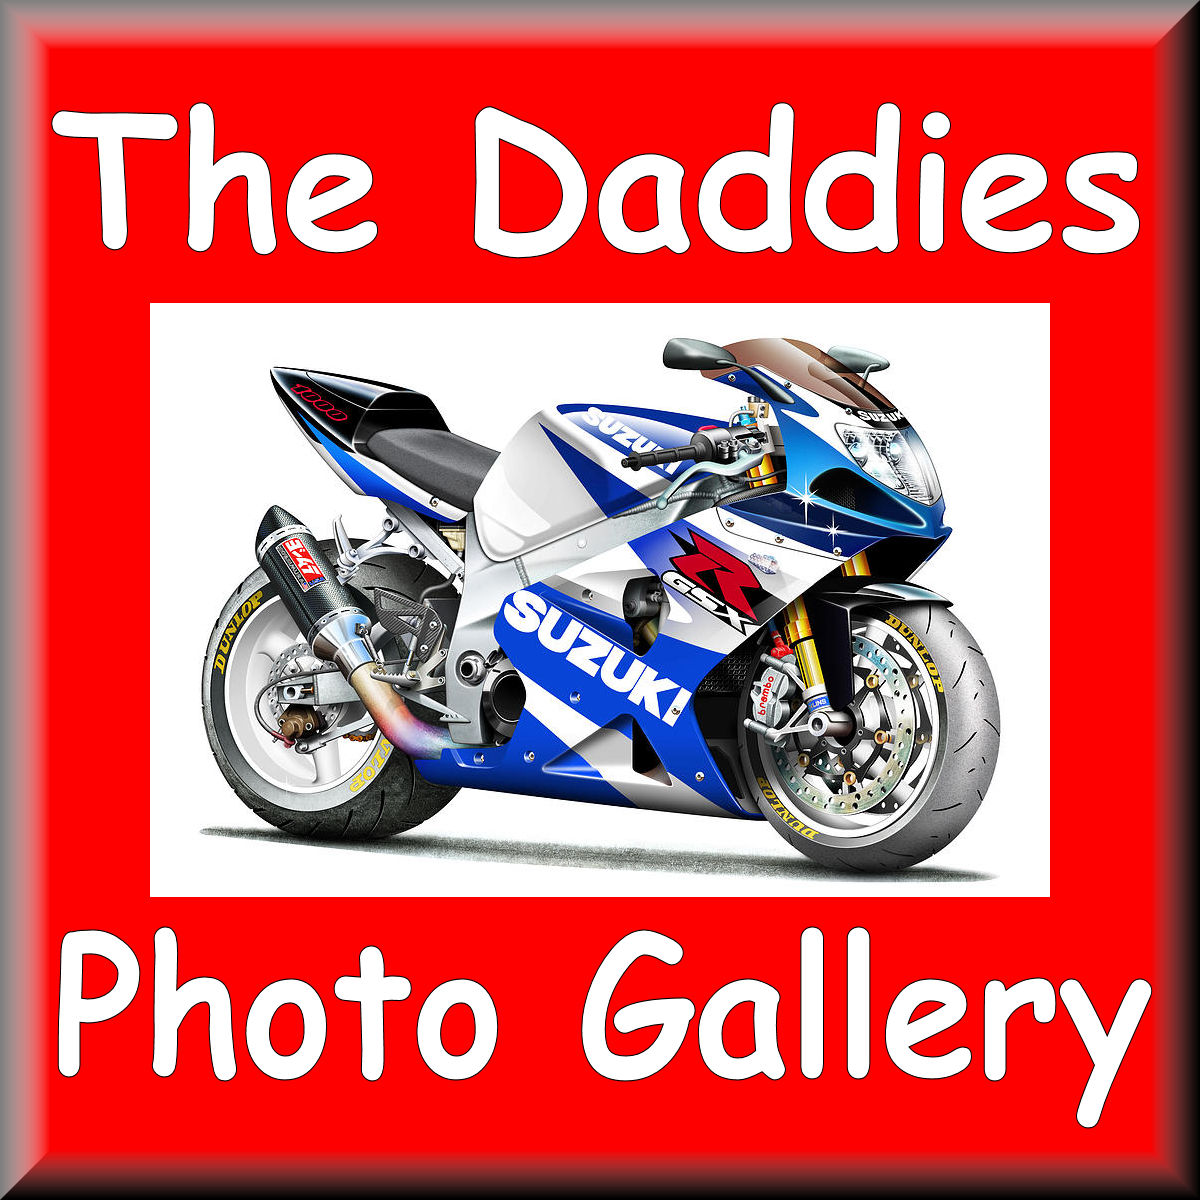 The Daddies Photo Gallery